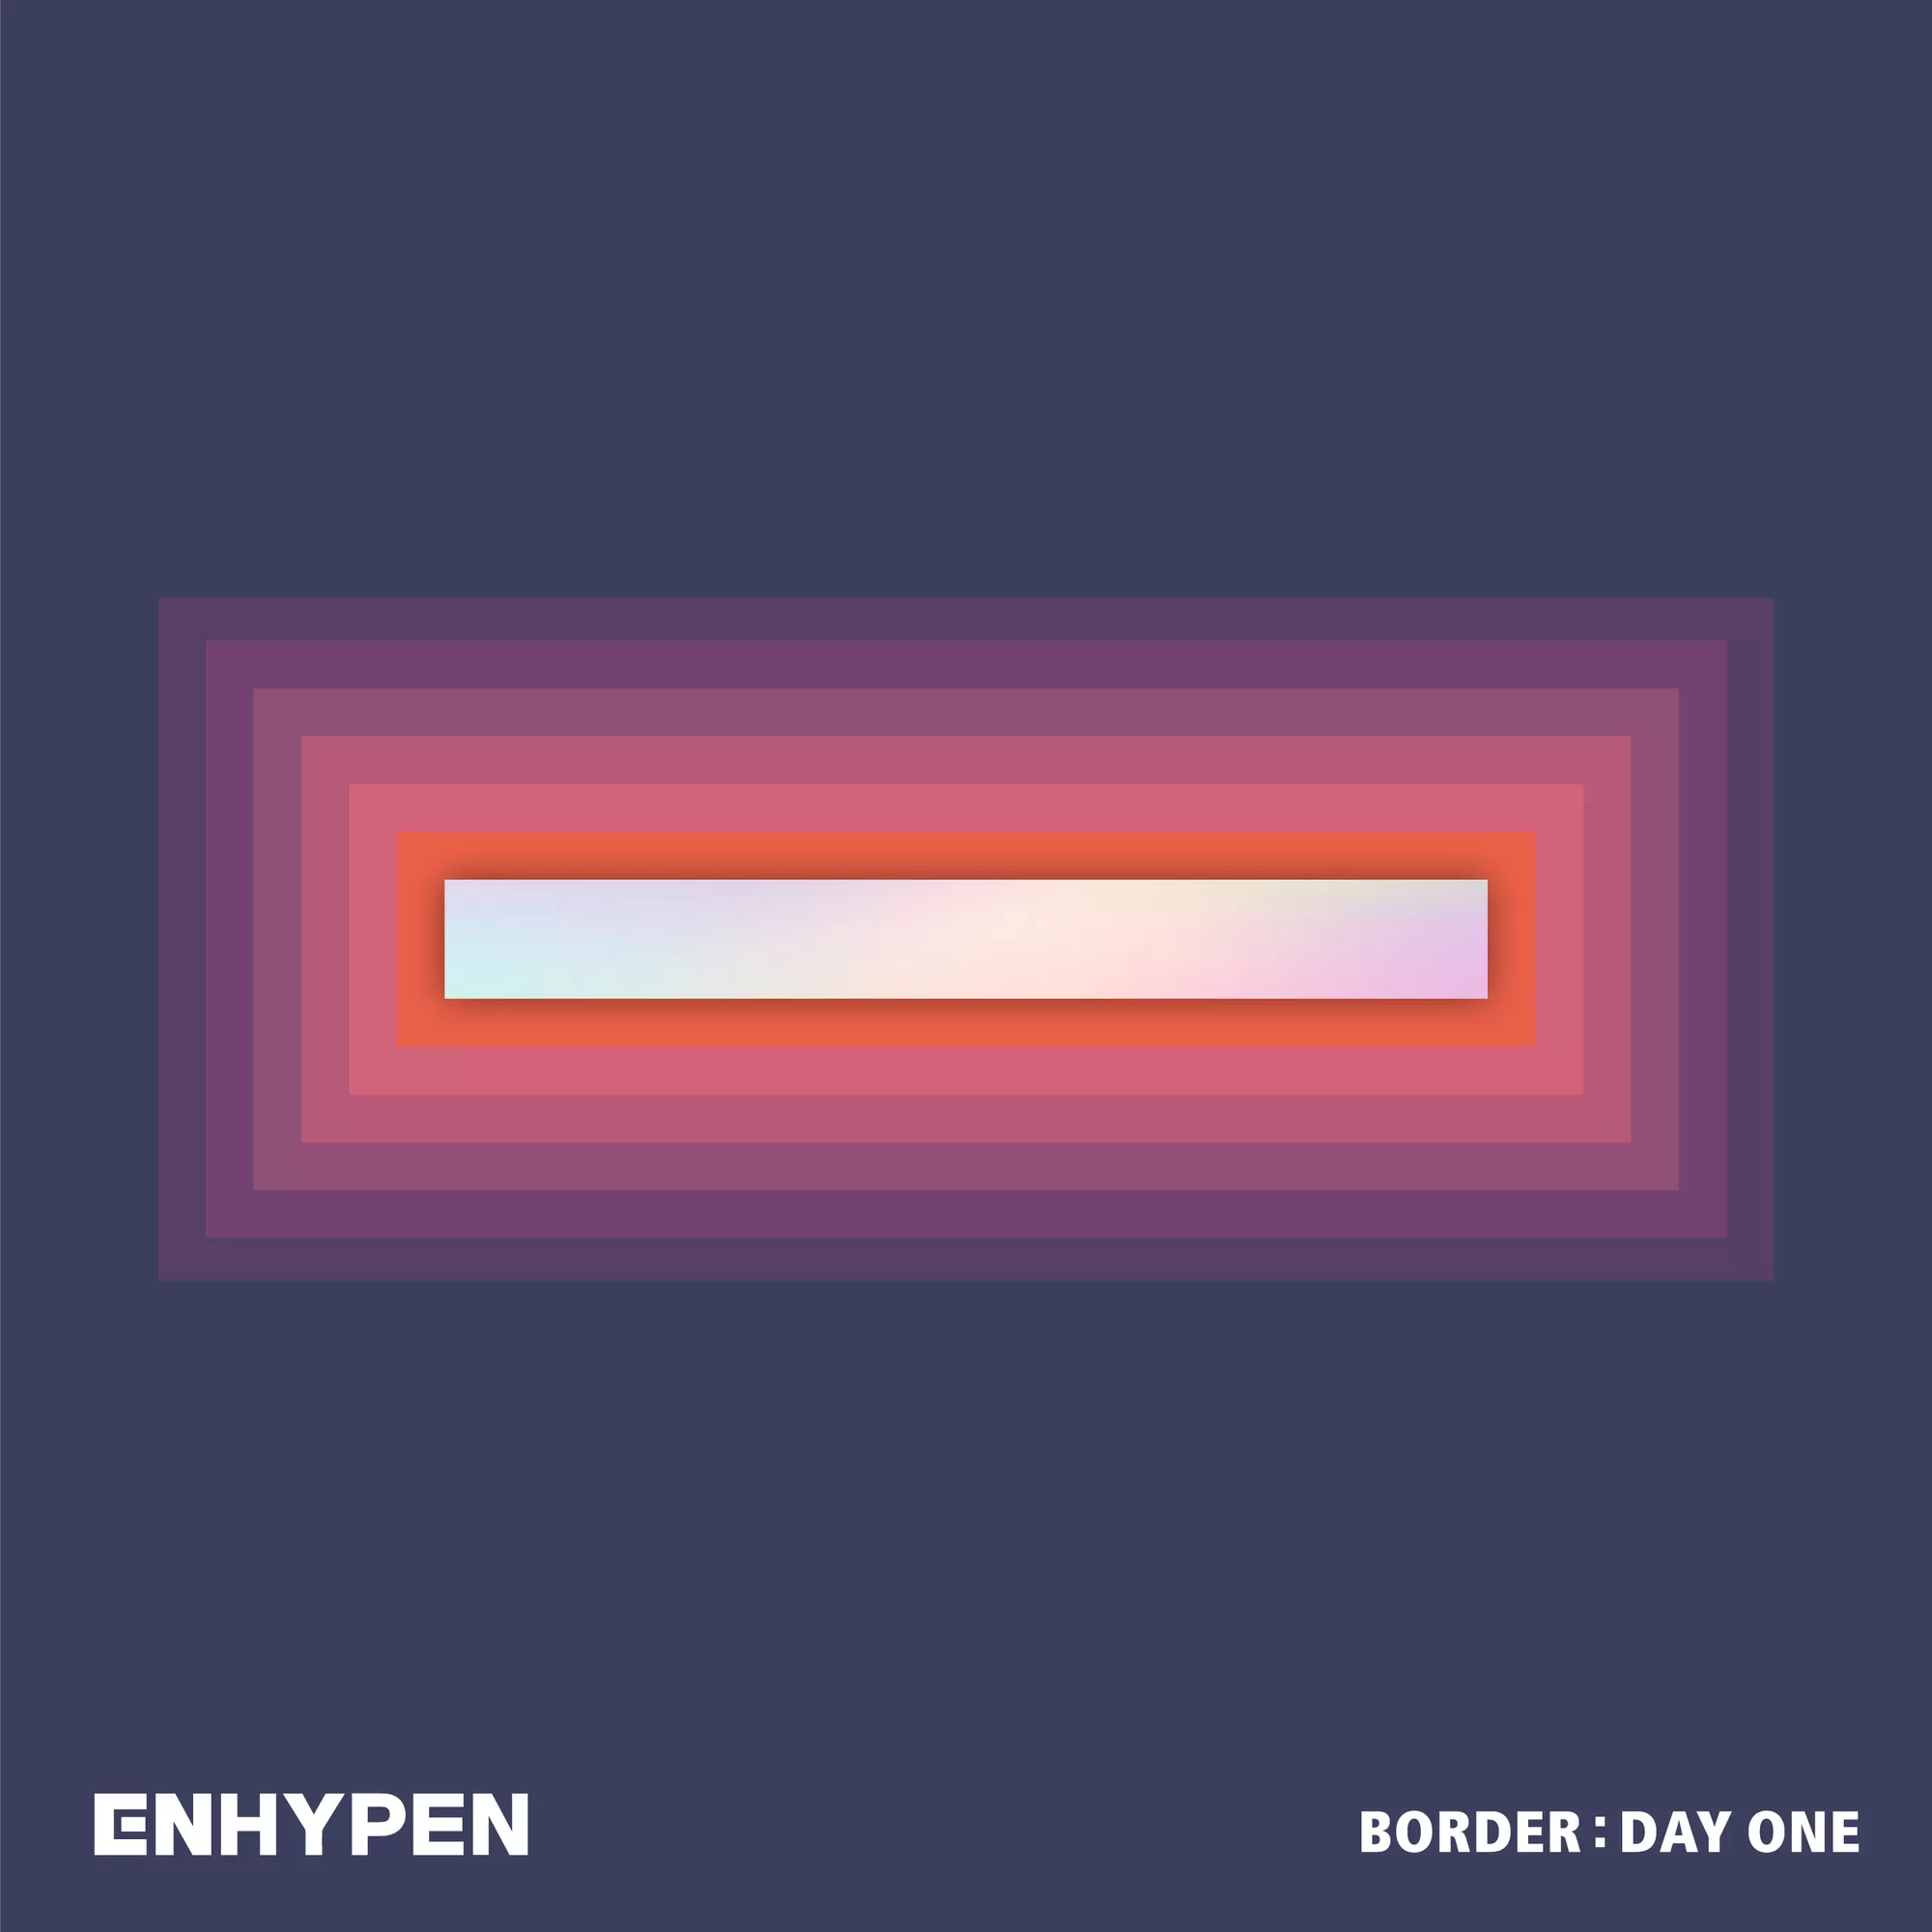 دانلود آهنگ جدید 10 Months به نام ENHYPEN